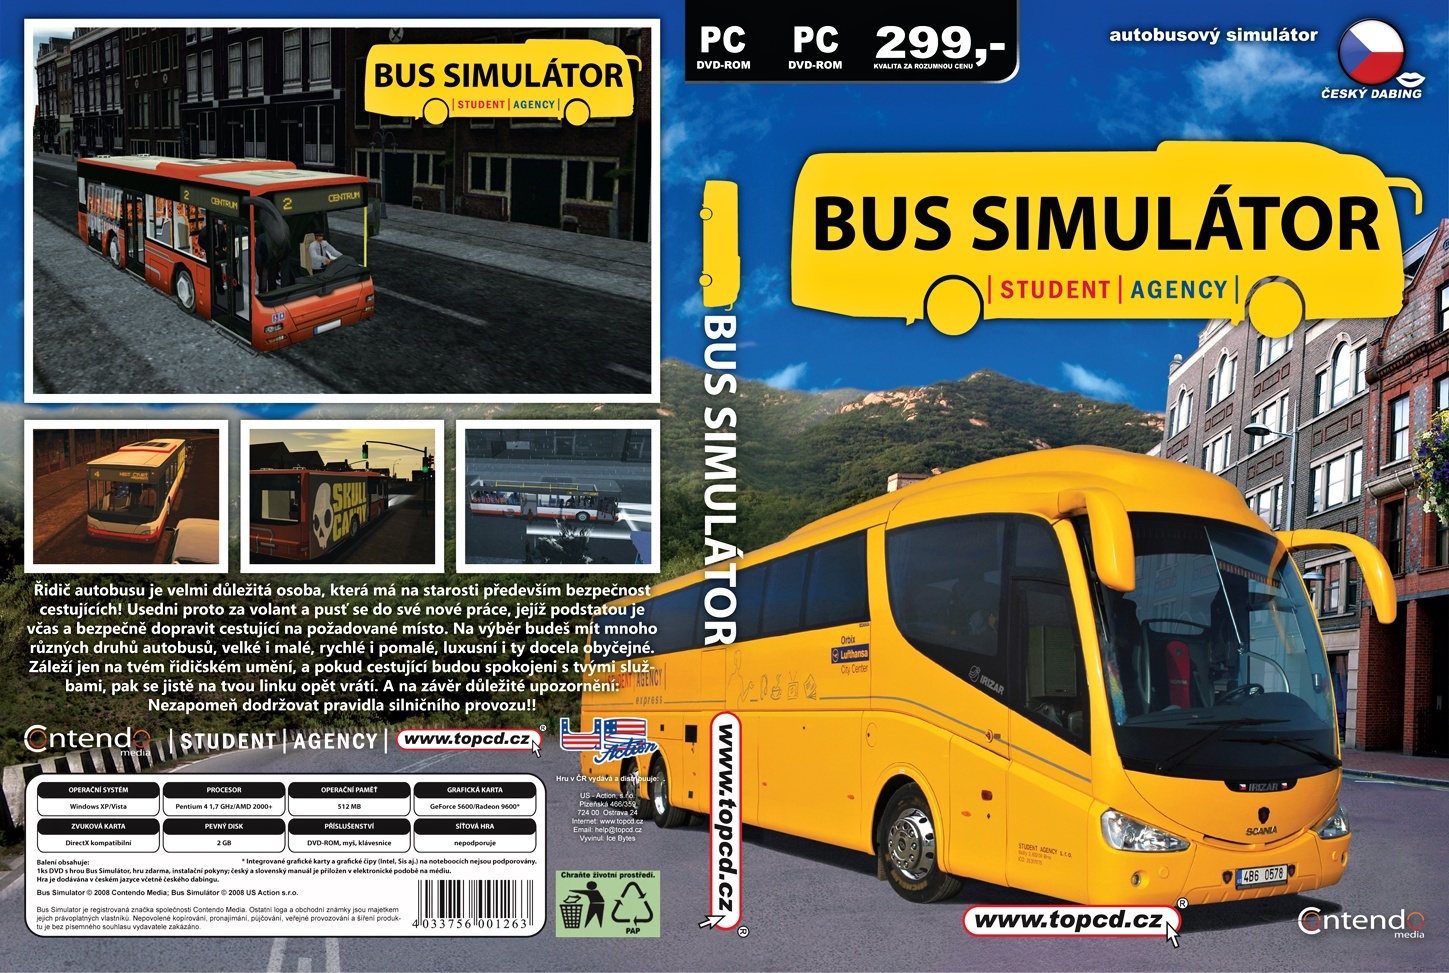 omsi bus simulator 2012 keygen